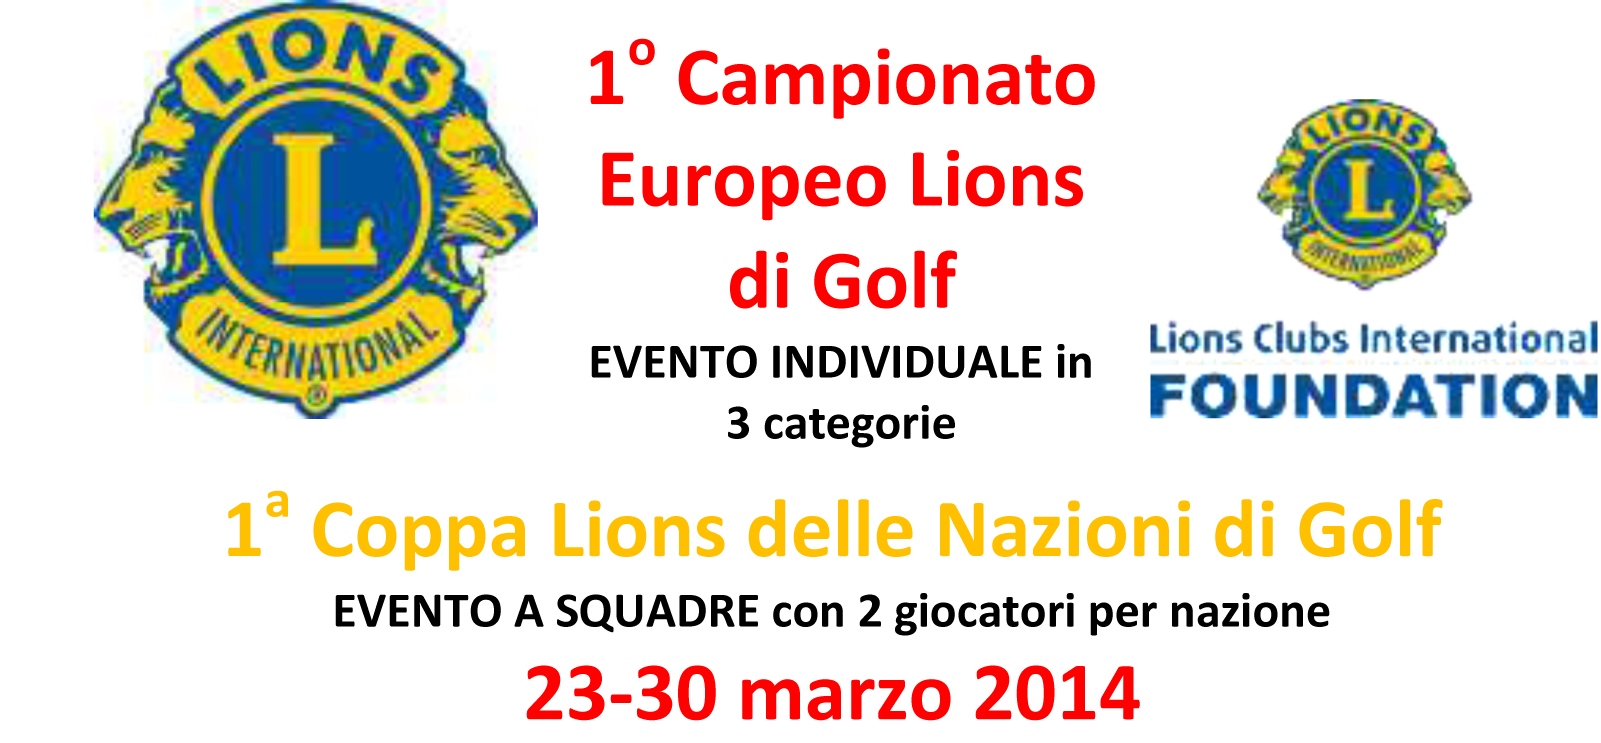 1° CAMPIONATO EUROPEO LIONS INDIVIDUALE E A SQUADRE 